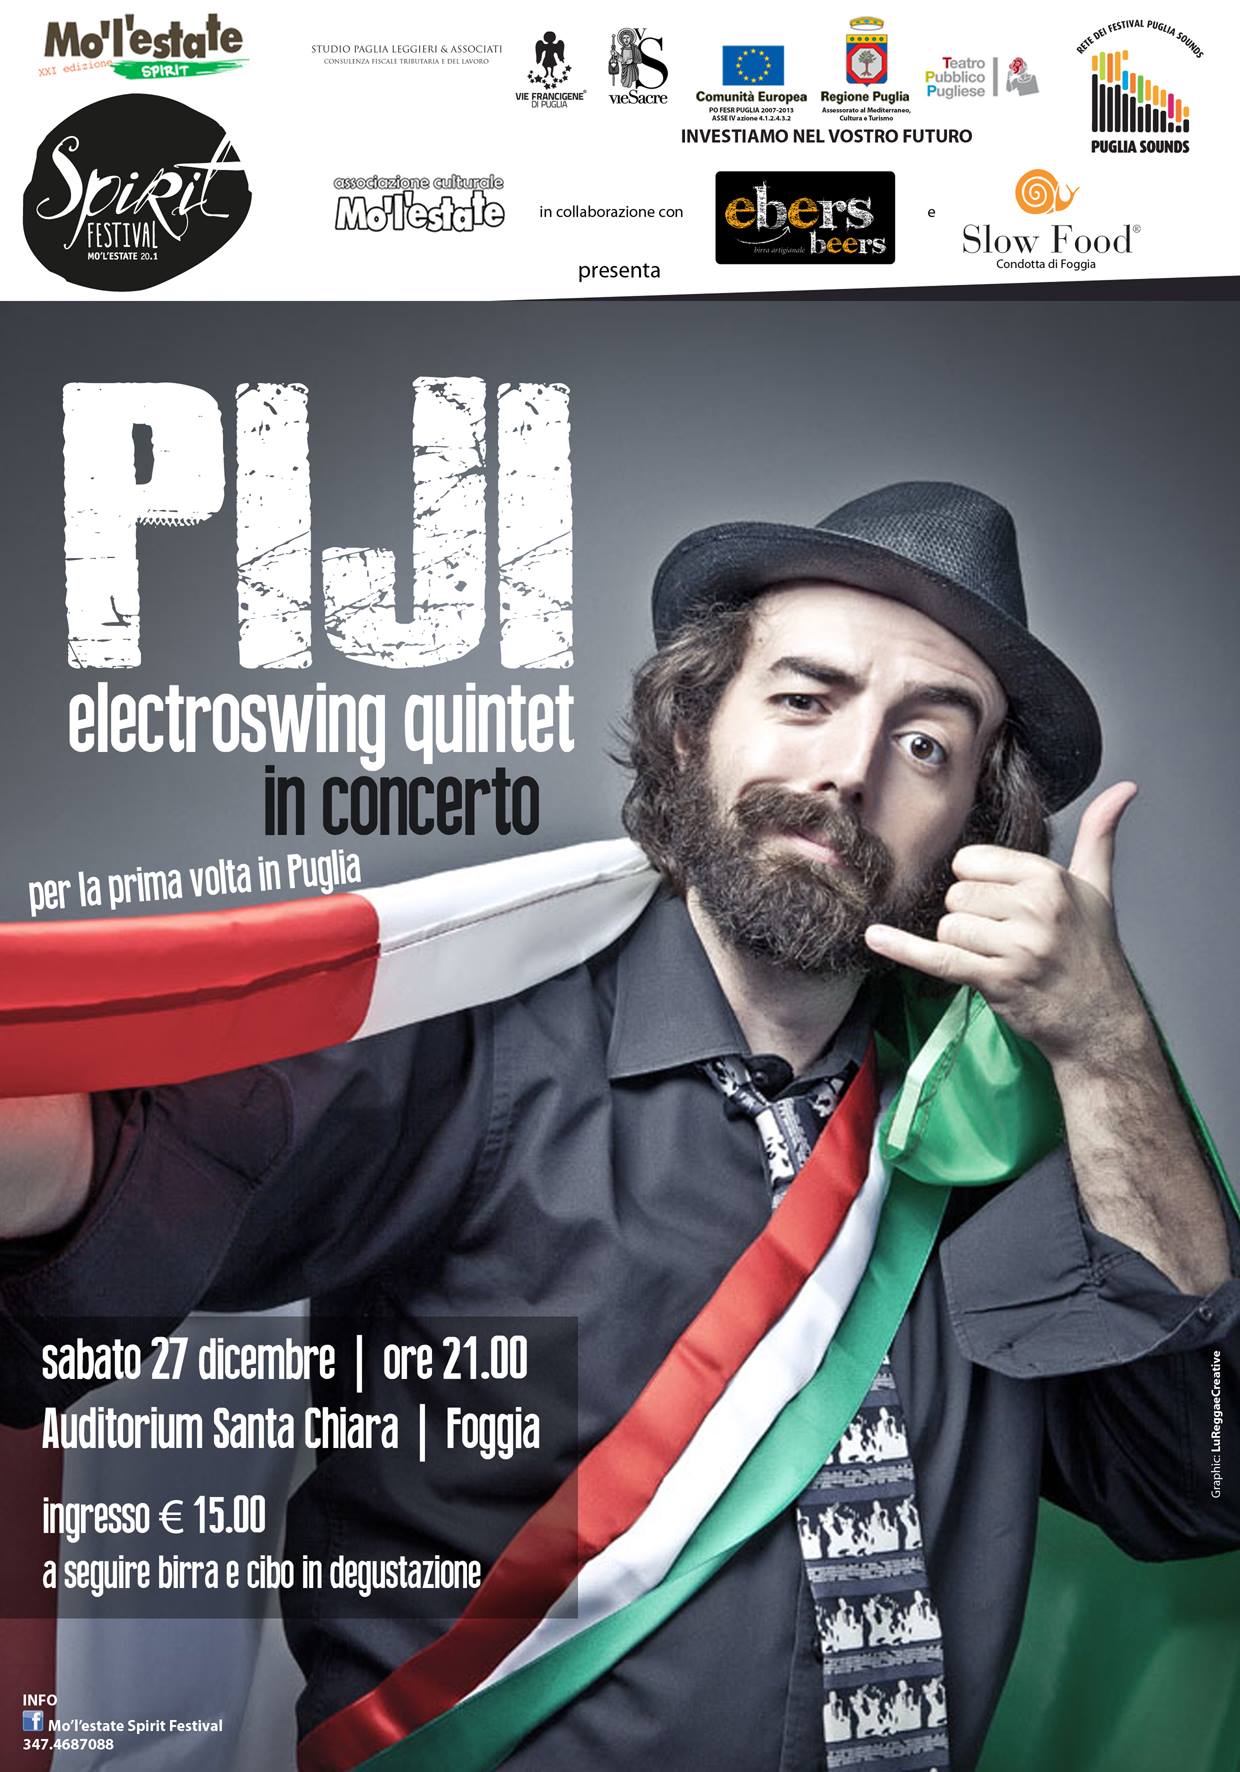 A Foggia, Piji Electroswing Quintet in concerto